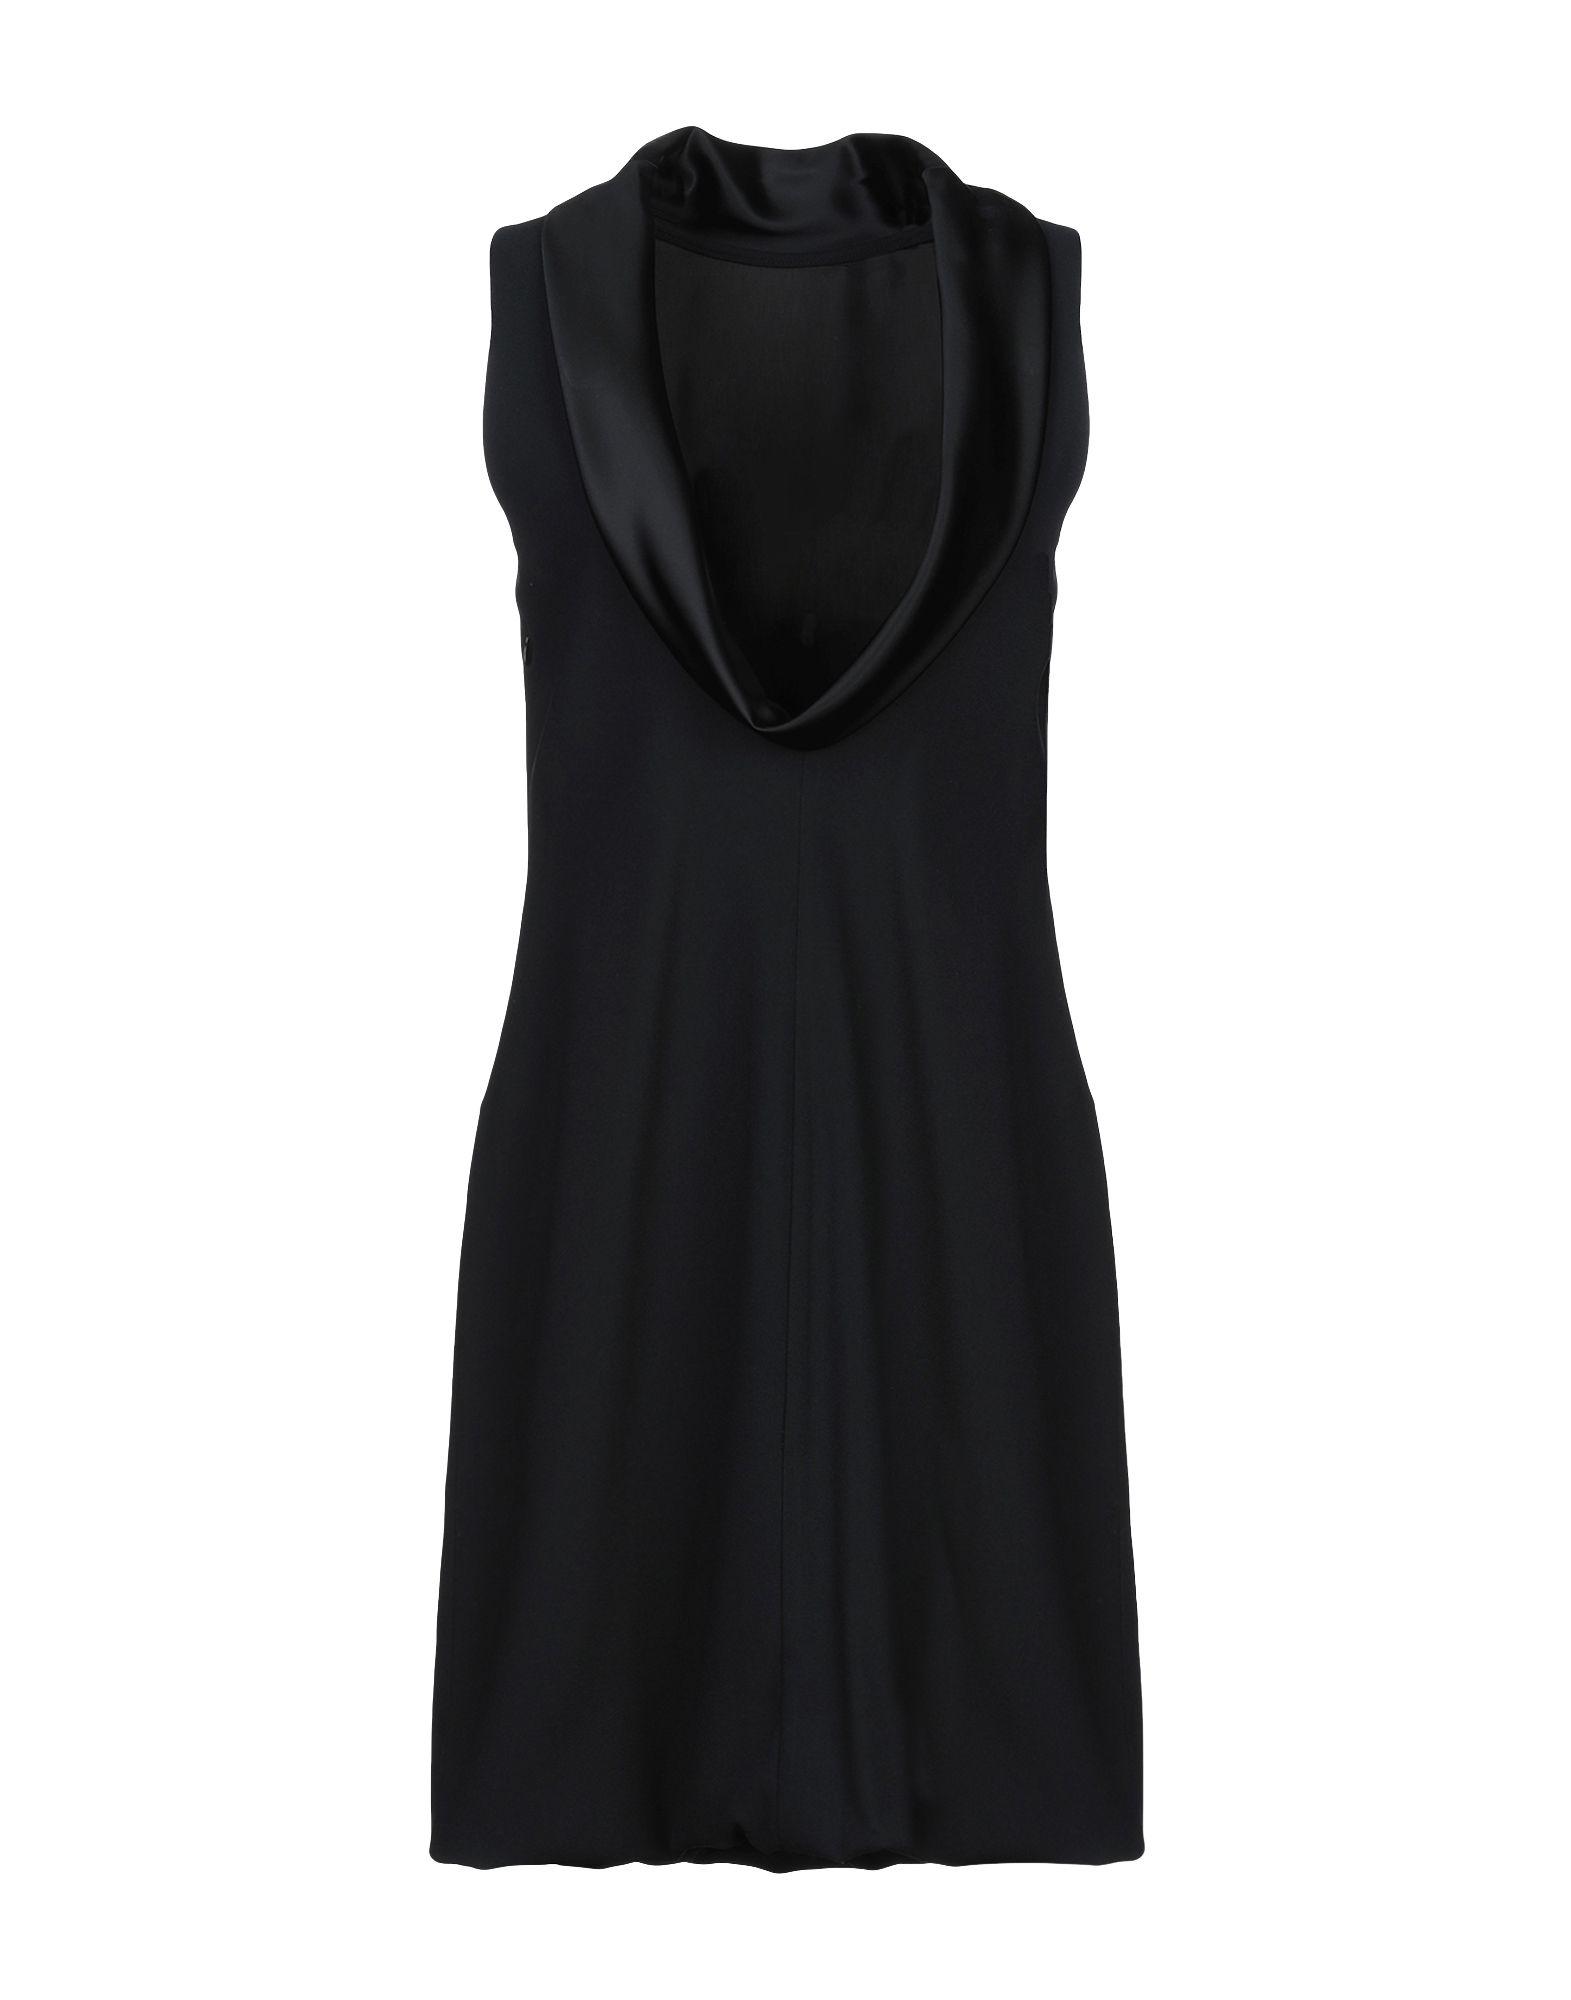 Caractere Satin Short Dress in Black - Lyst